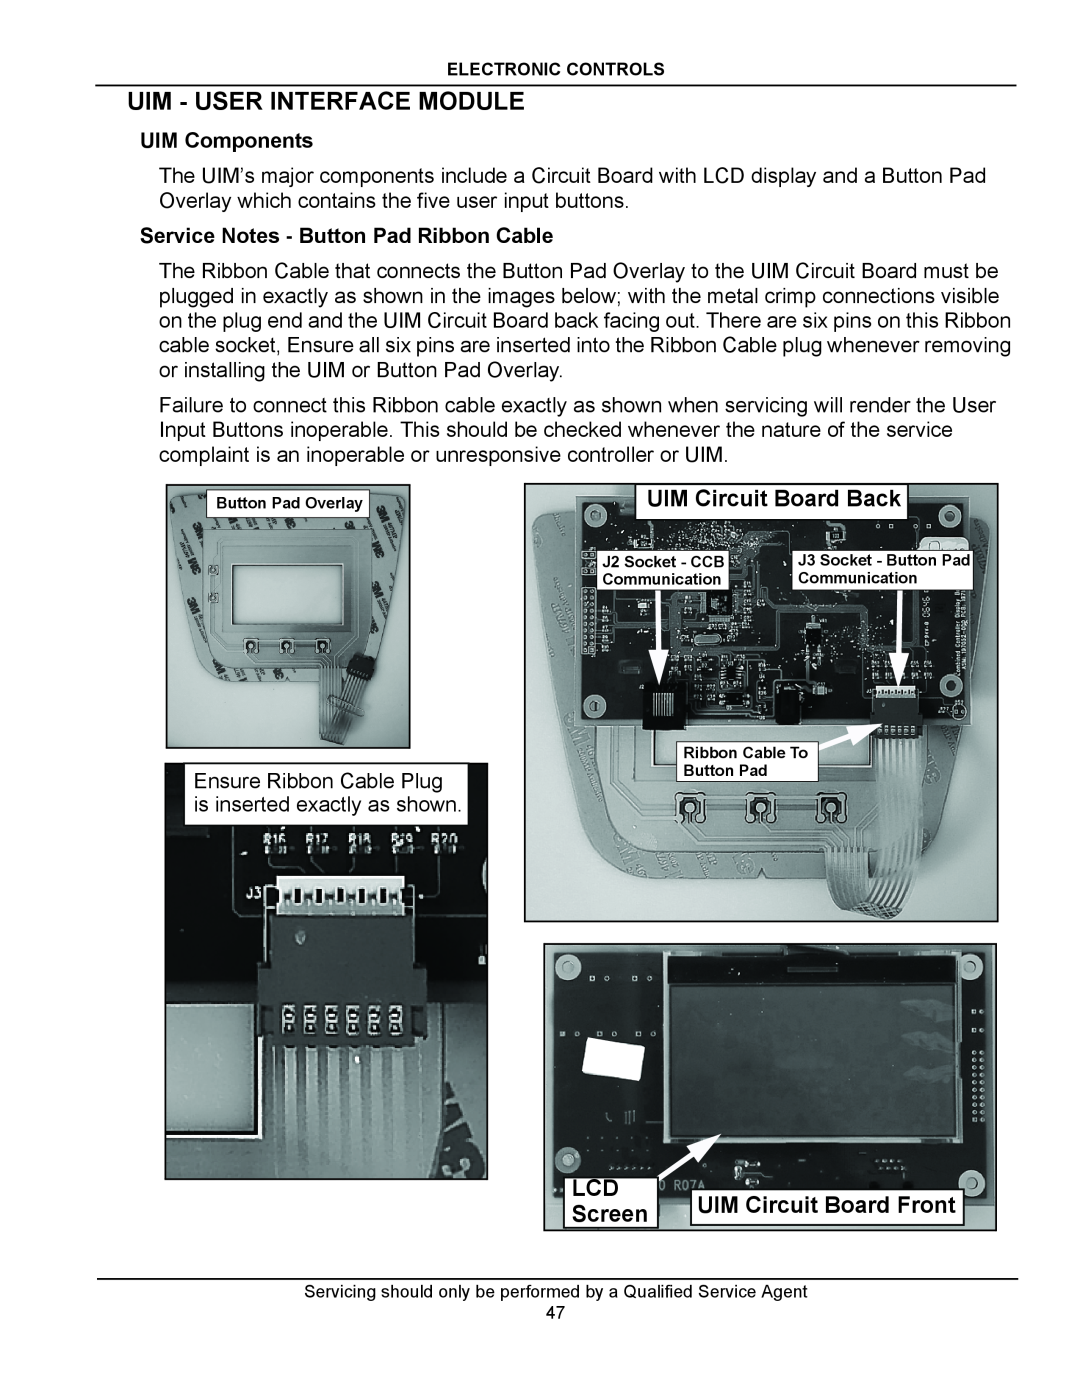 American Water Heater ITCE3-52/80/119 Uim - User Interface Module, UIM Circuit Board Back, UIM Circuit Board Front, Screen 